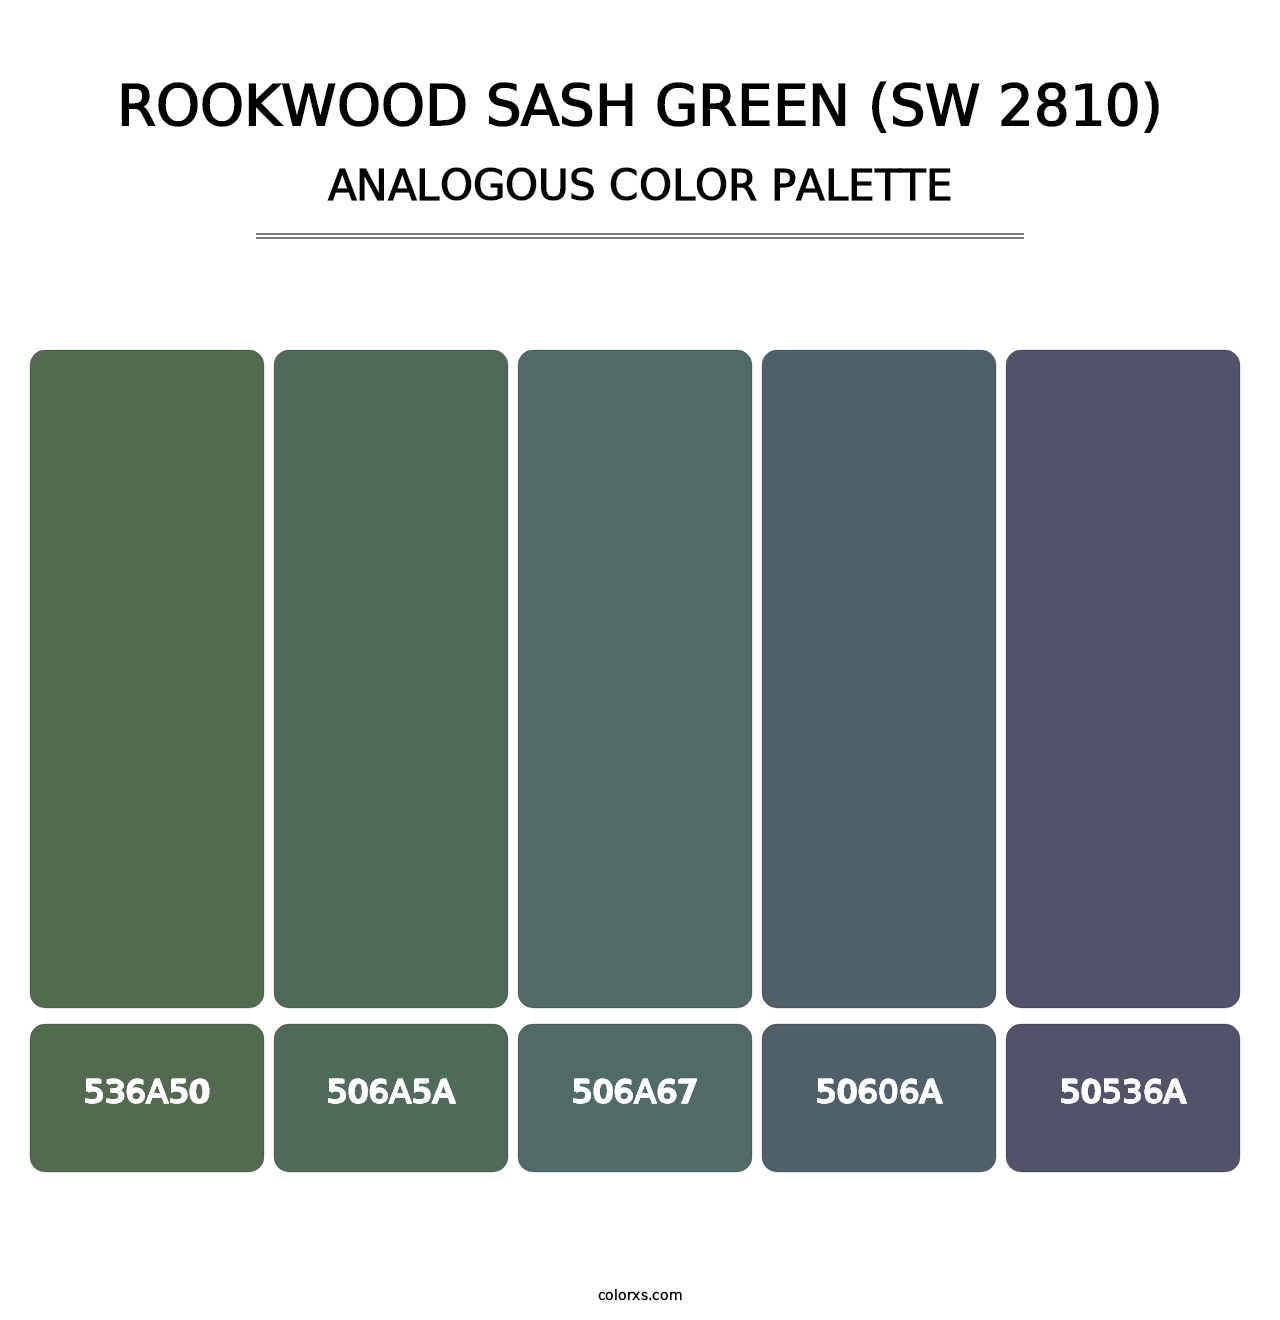 Rookwood Sash Green (SW 2810) - Analogous Color Palette